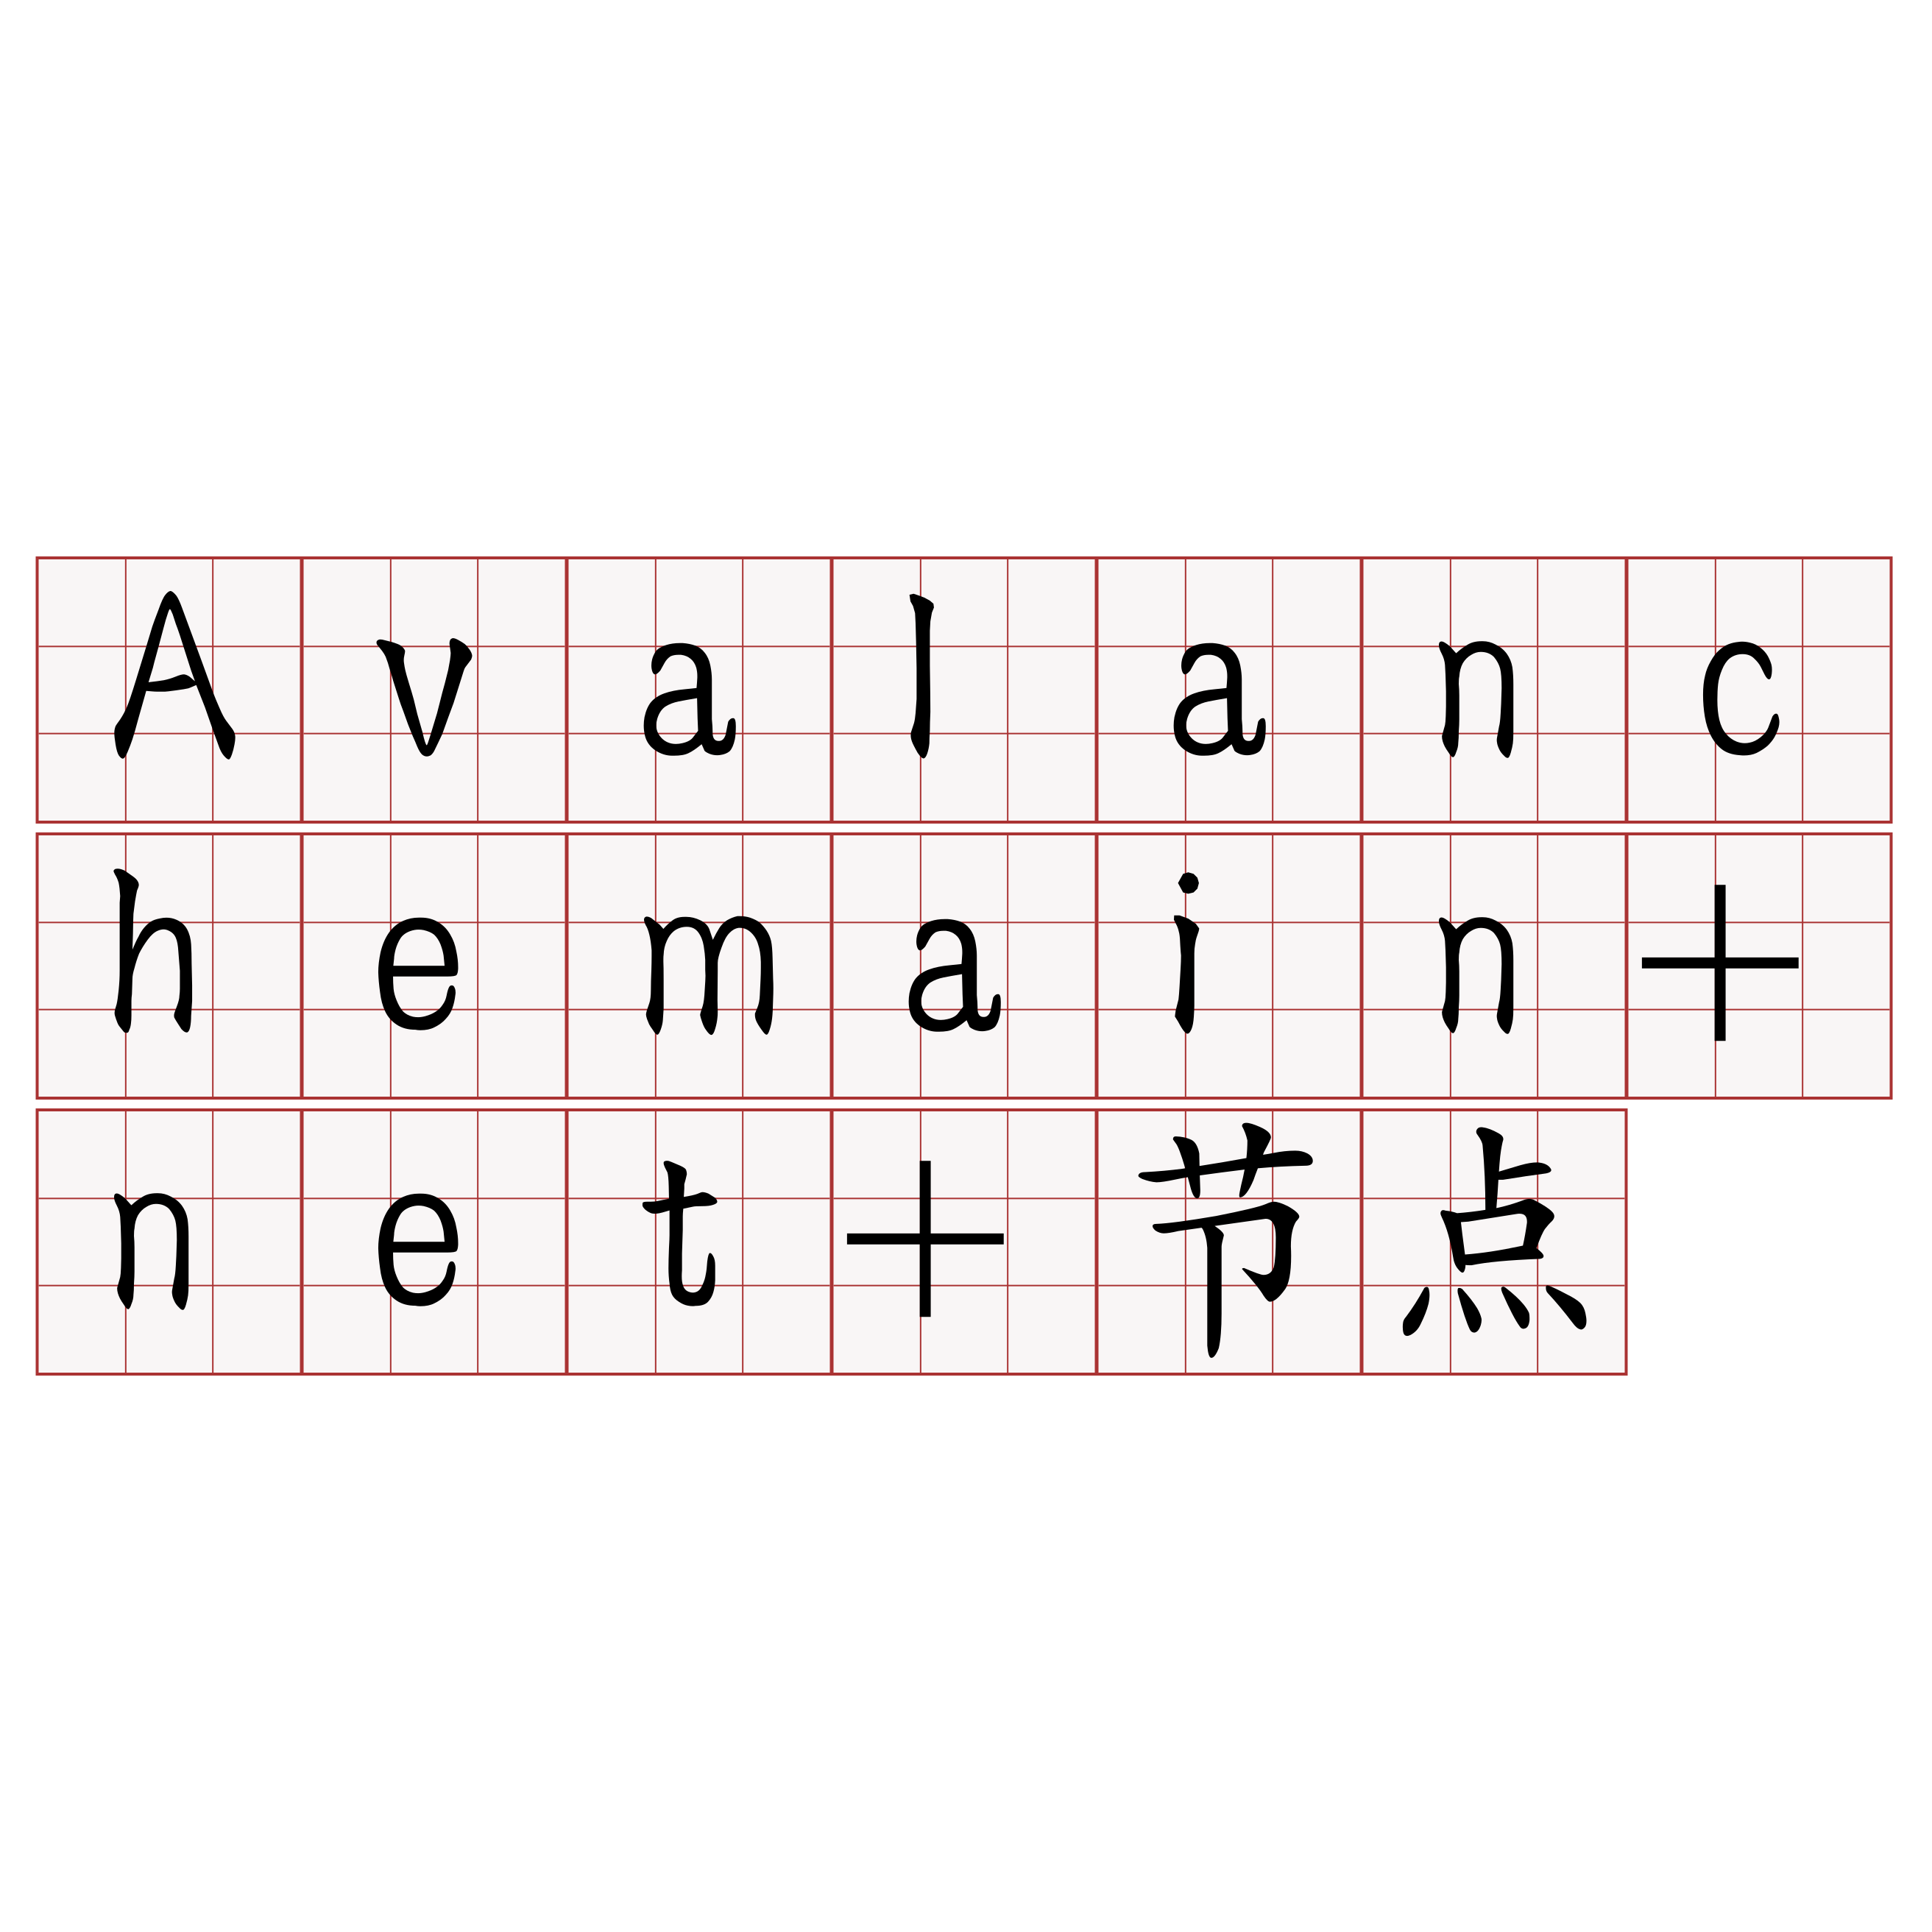 Avalanchemain+net+节点